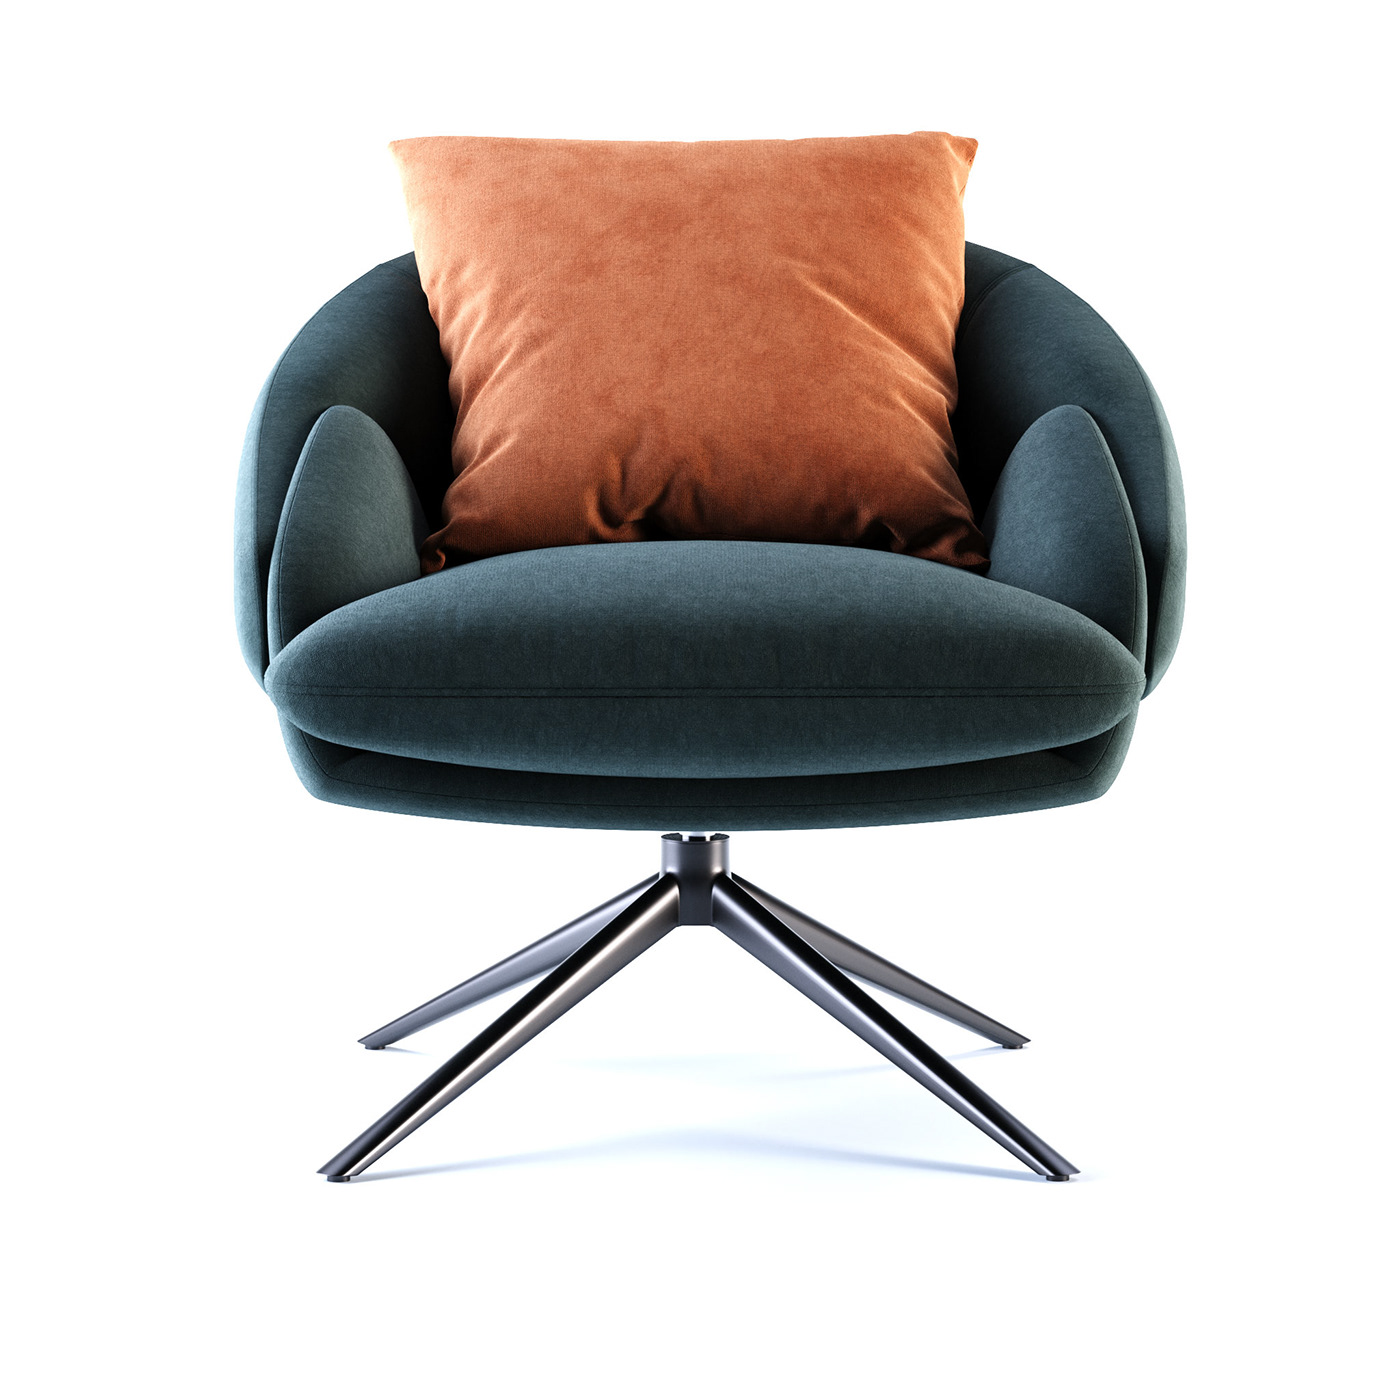 armchair furniture Render 3D modern corona visualization chair furniture design  cloth